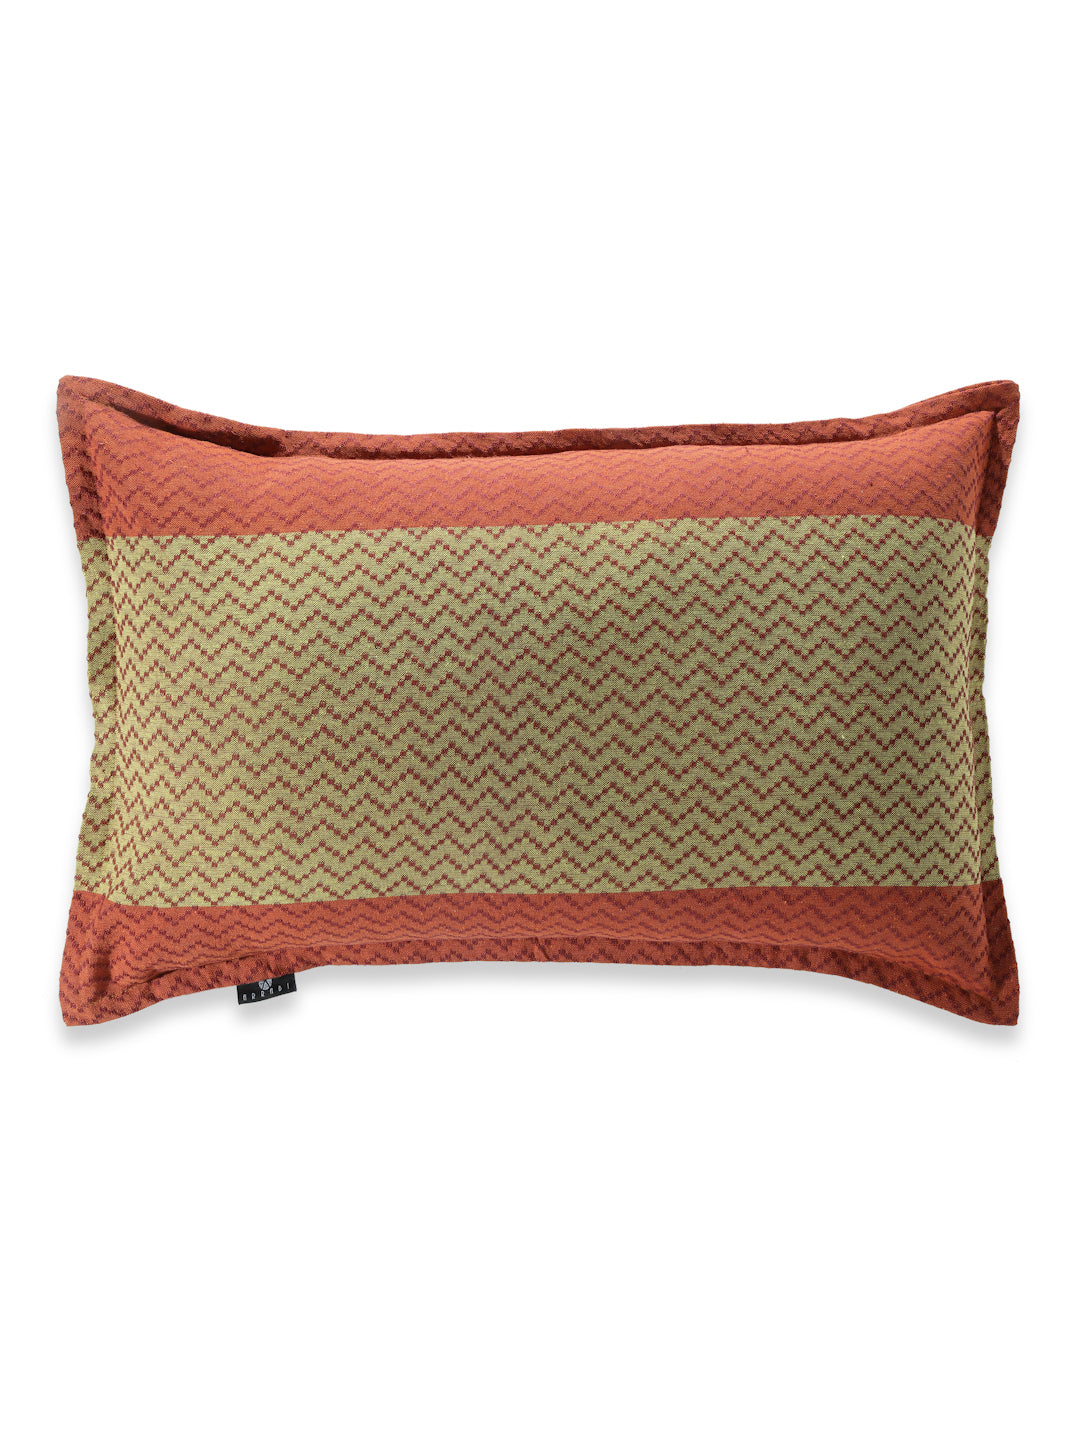 Arrabi Red Geometric Handwoven Cotton Set of 2 Pillow Covers (70 x 45 cm)